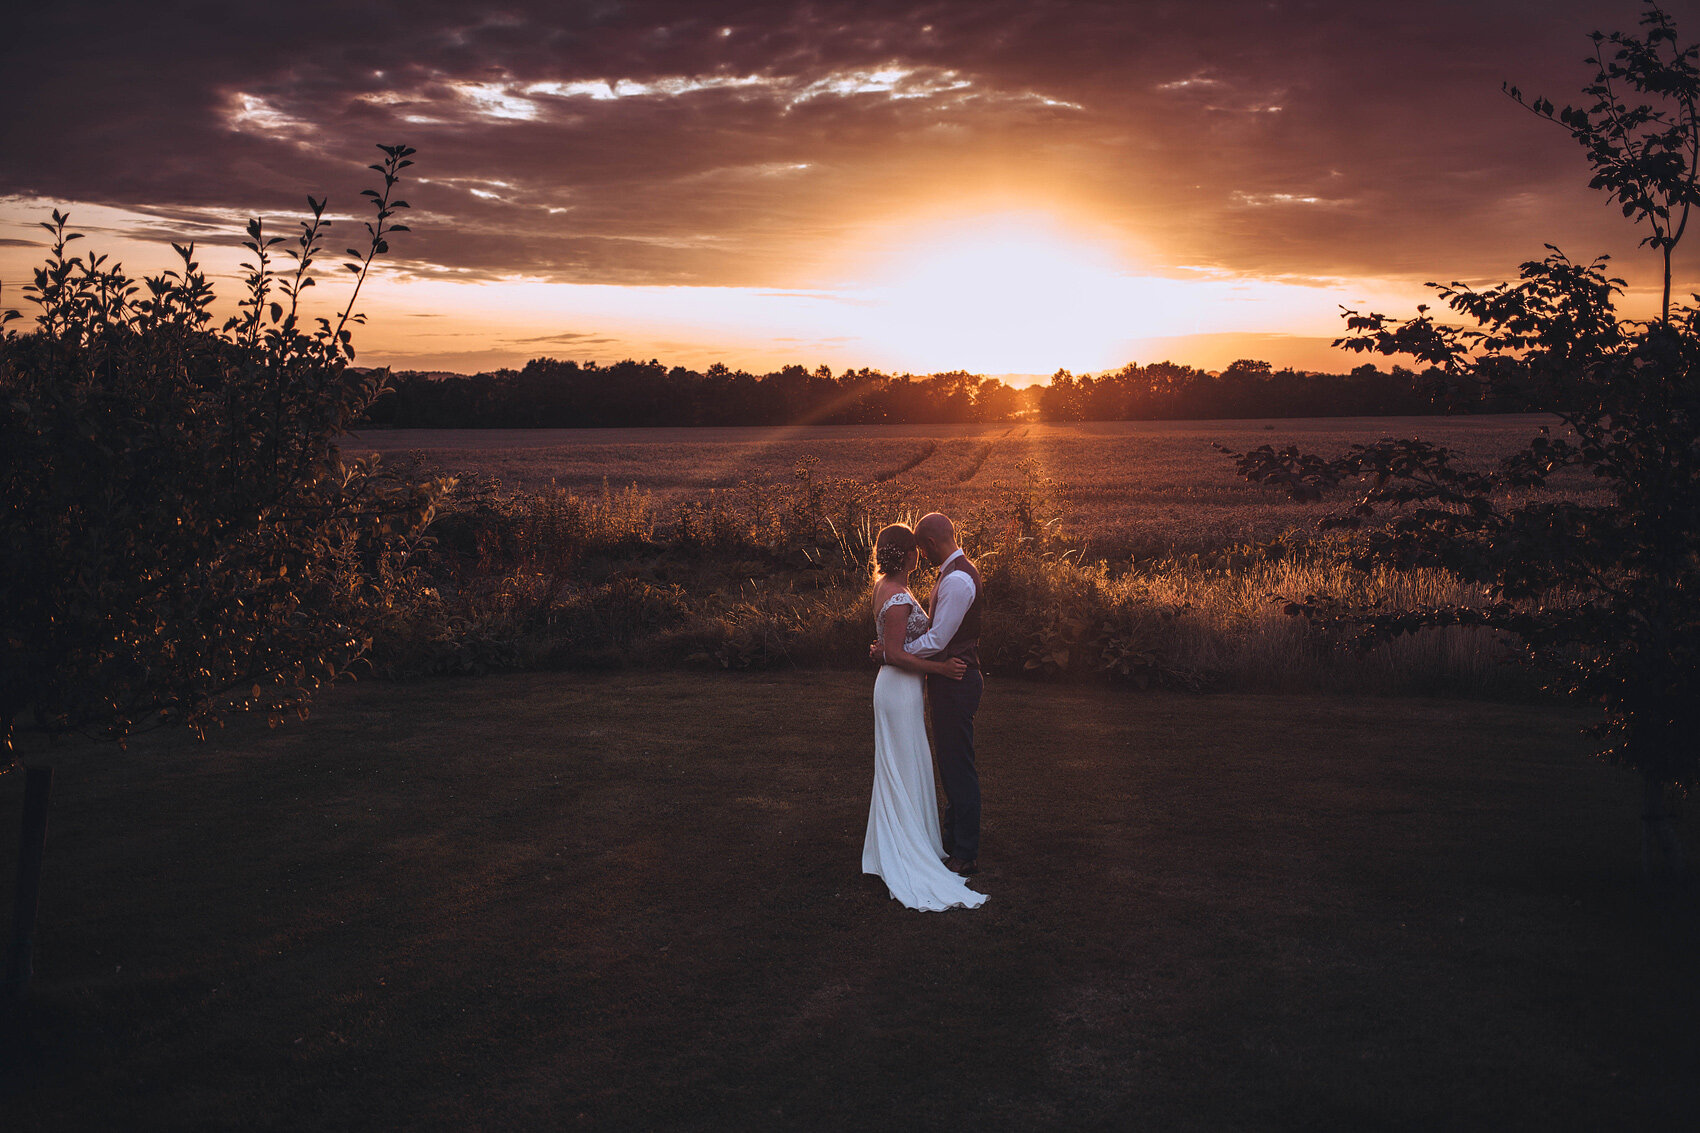 Brewerstreet Farmhouse Wedding Photographer - Claire Basiuk Photography - 24.jpg